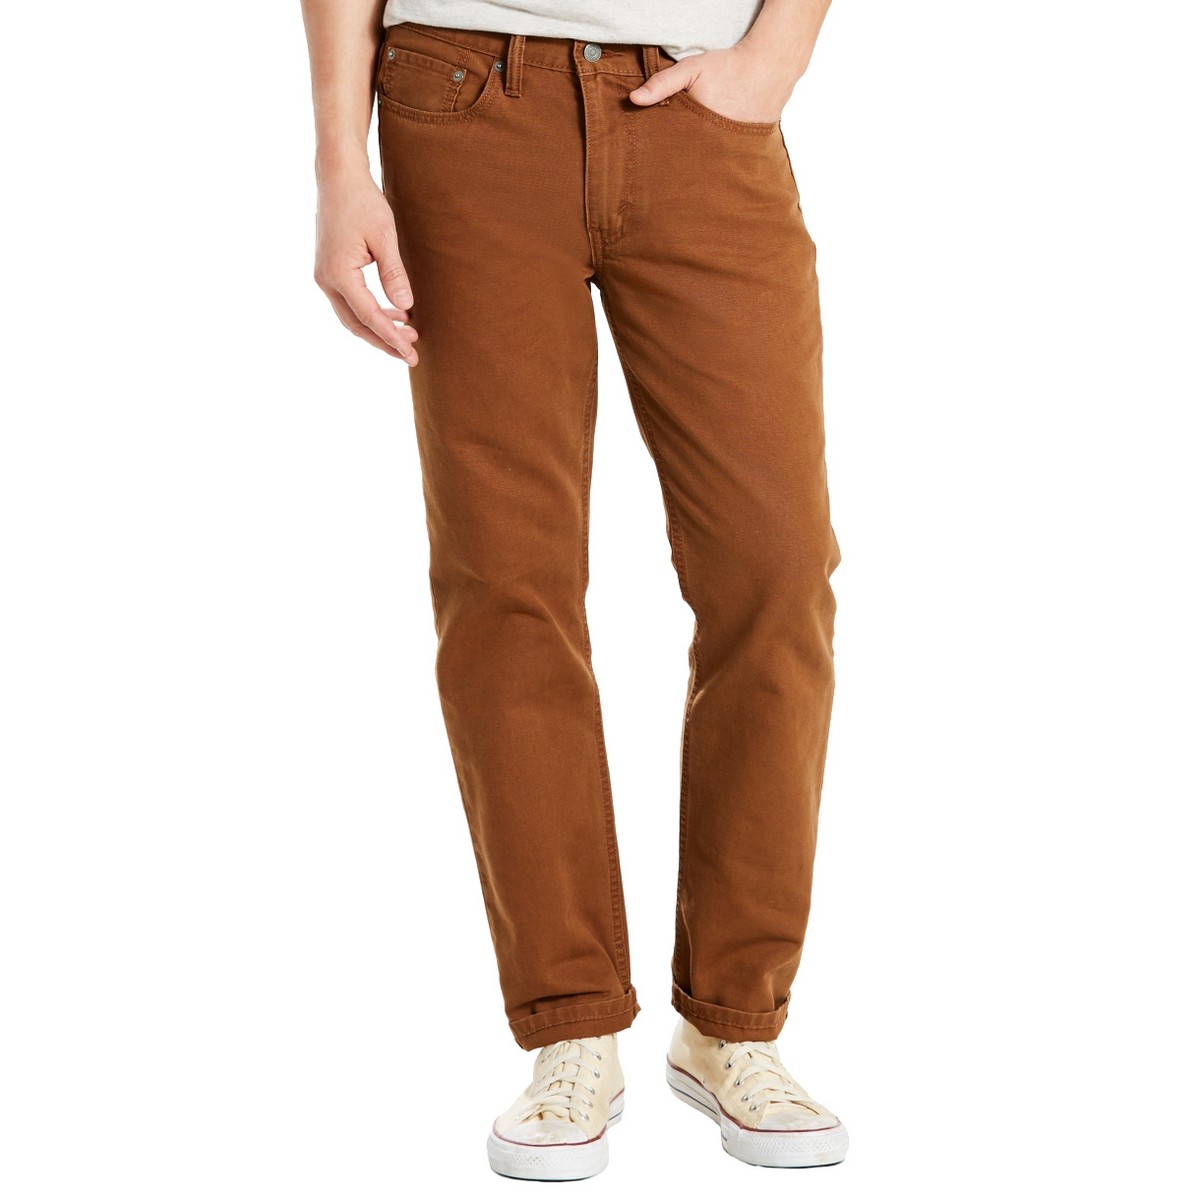 LEVIS NEW Men's Brown 514 Regular Fit Straight Leg Jeans 29X30 TEDO | eBay